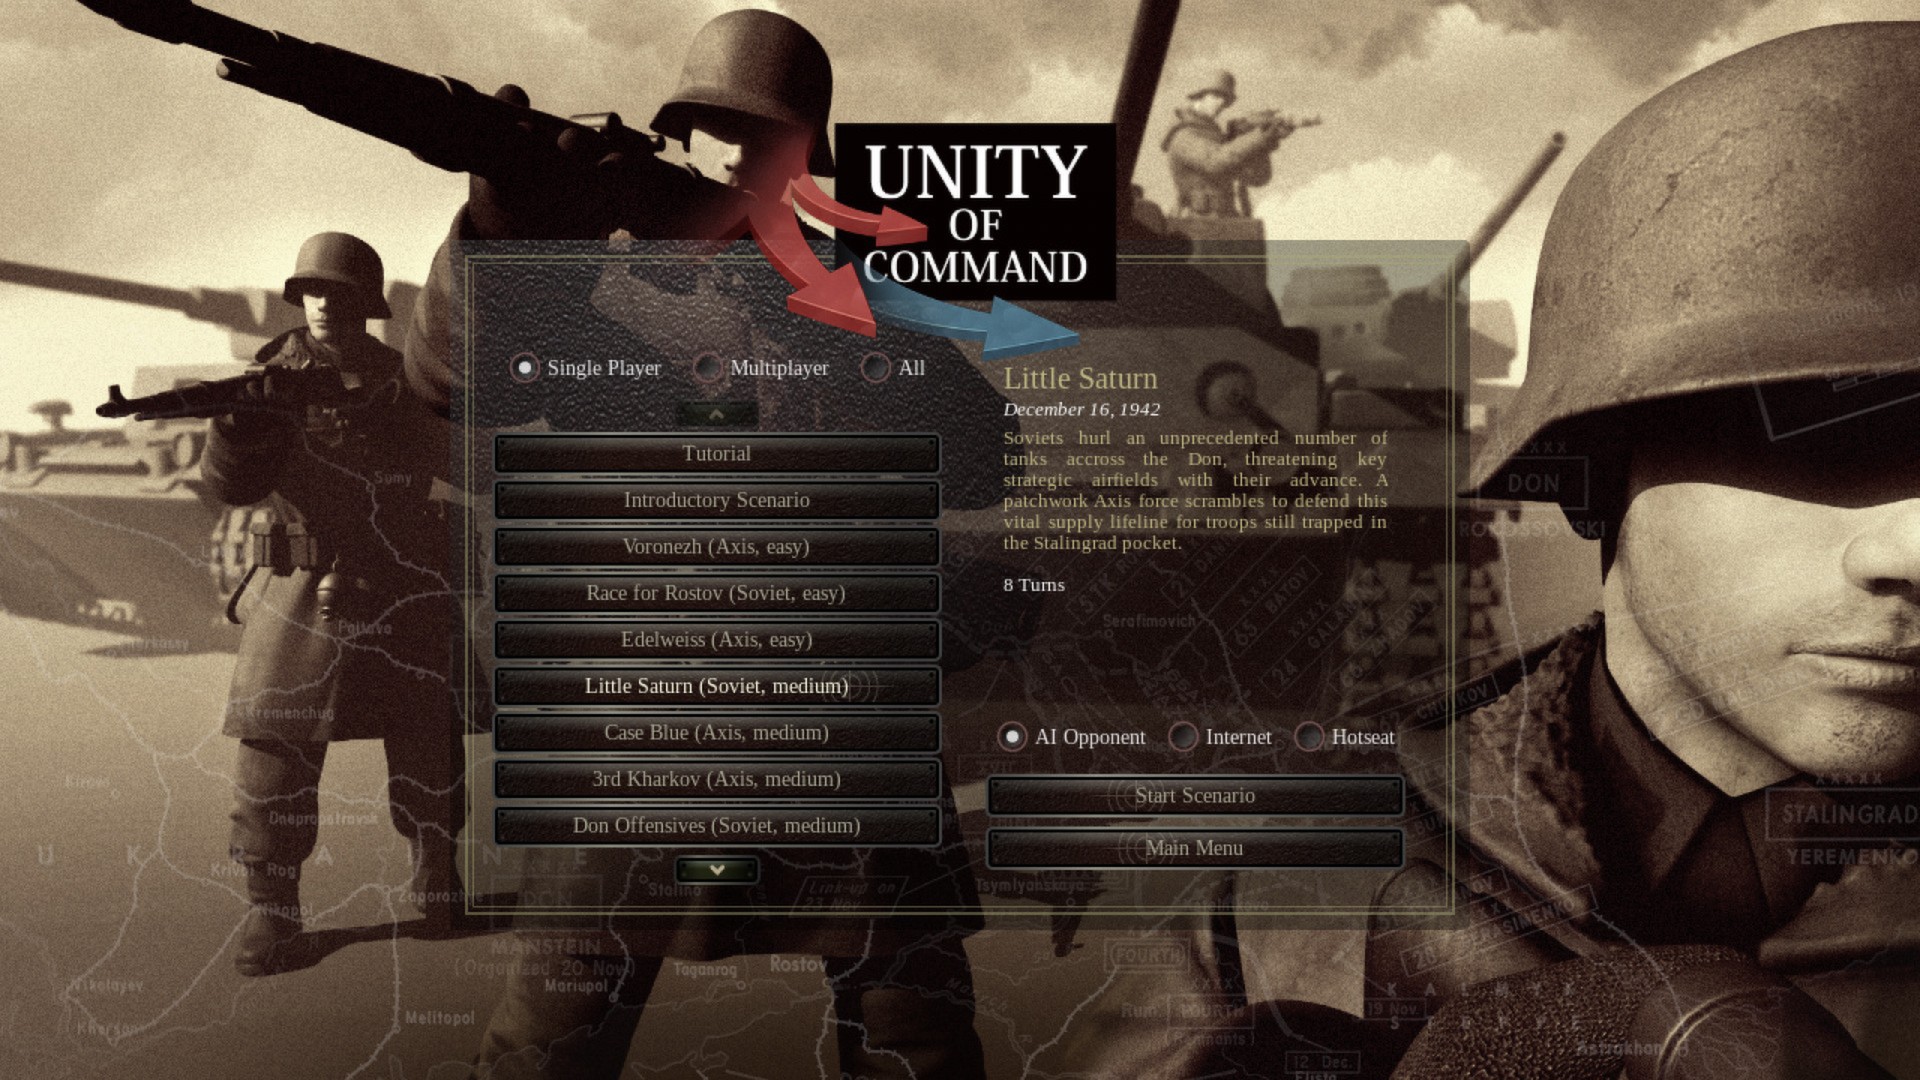 Unity of Command: Stalingrad Campaign (Steam key / ROW)